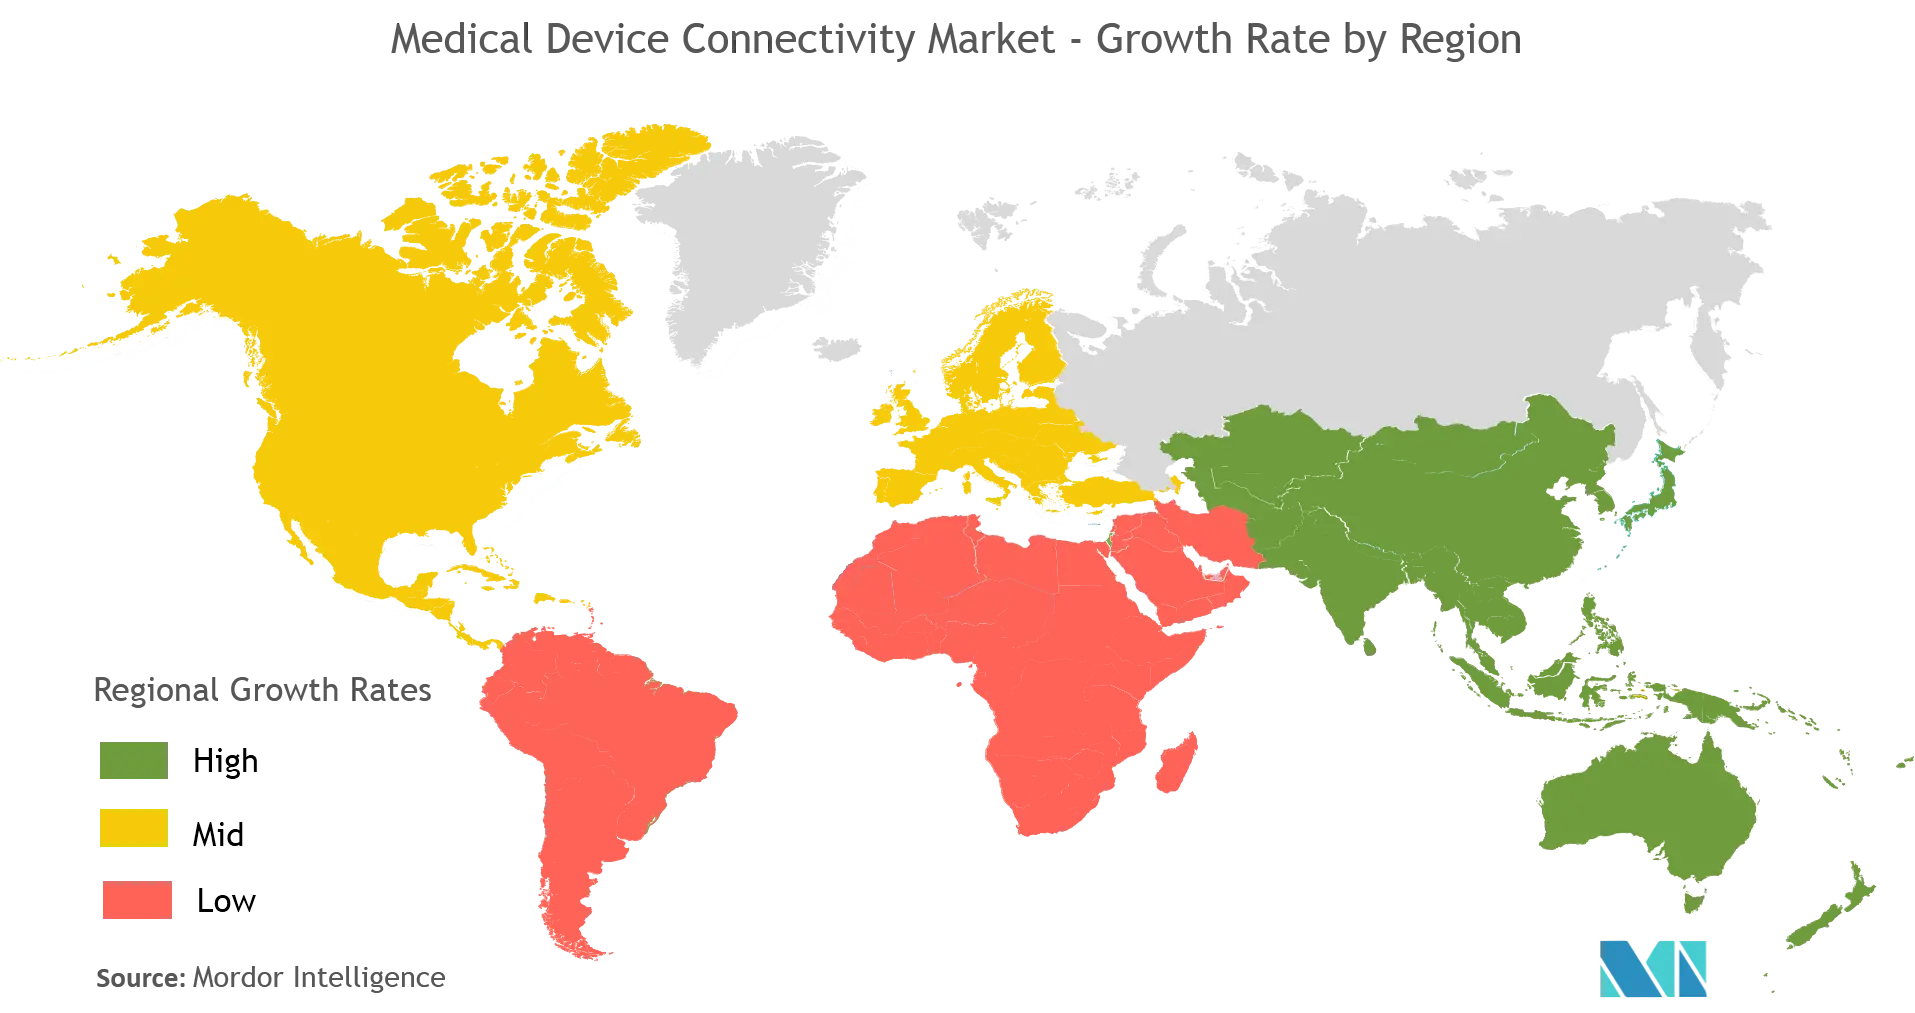 Medical Device Connectivity Market Forecast